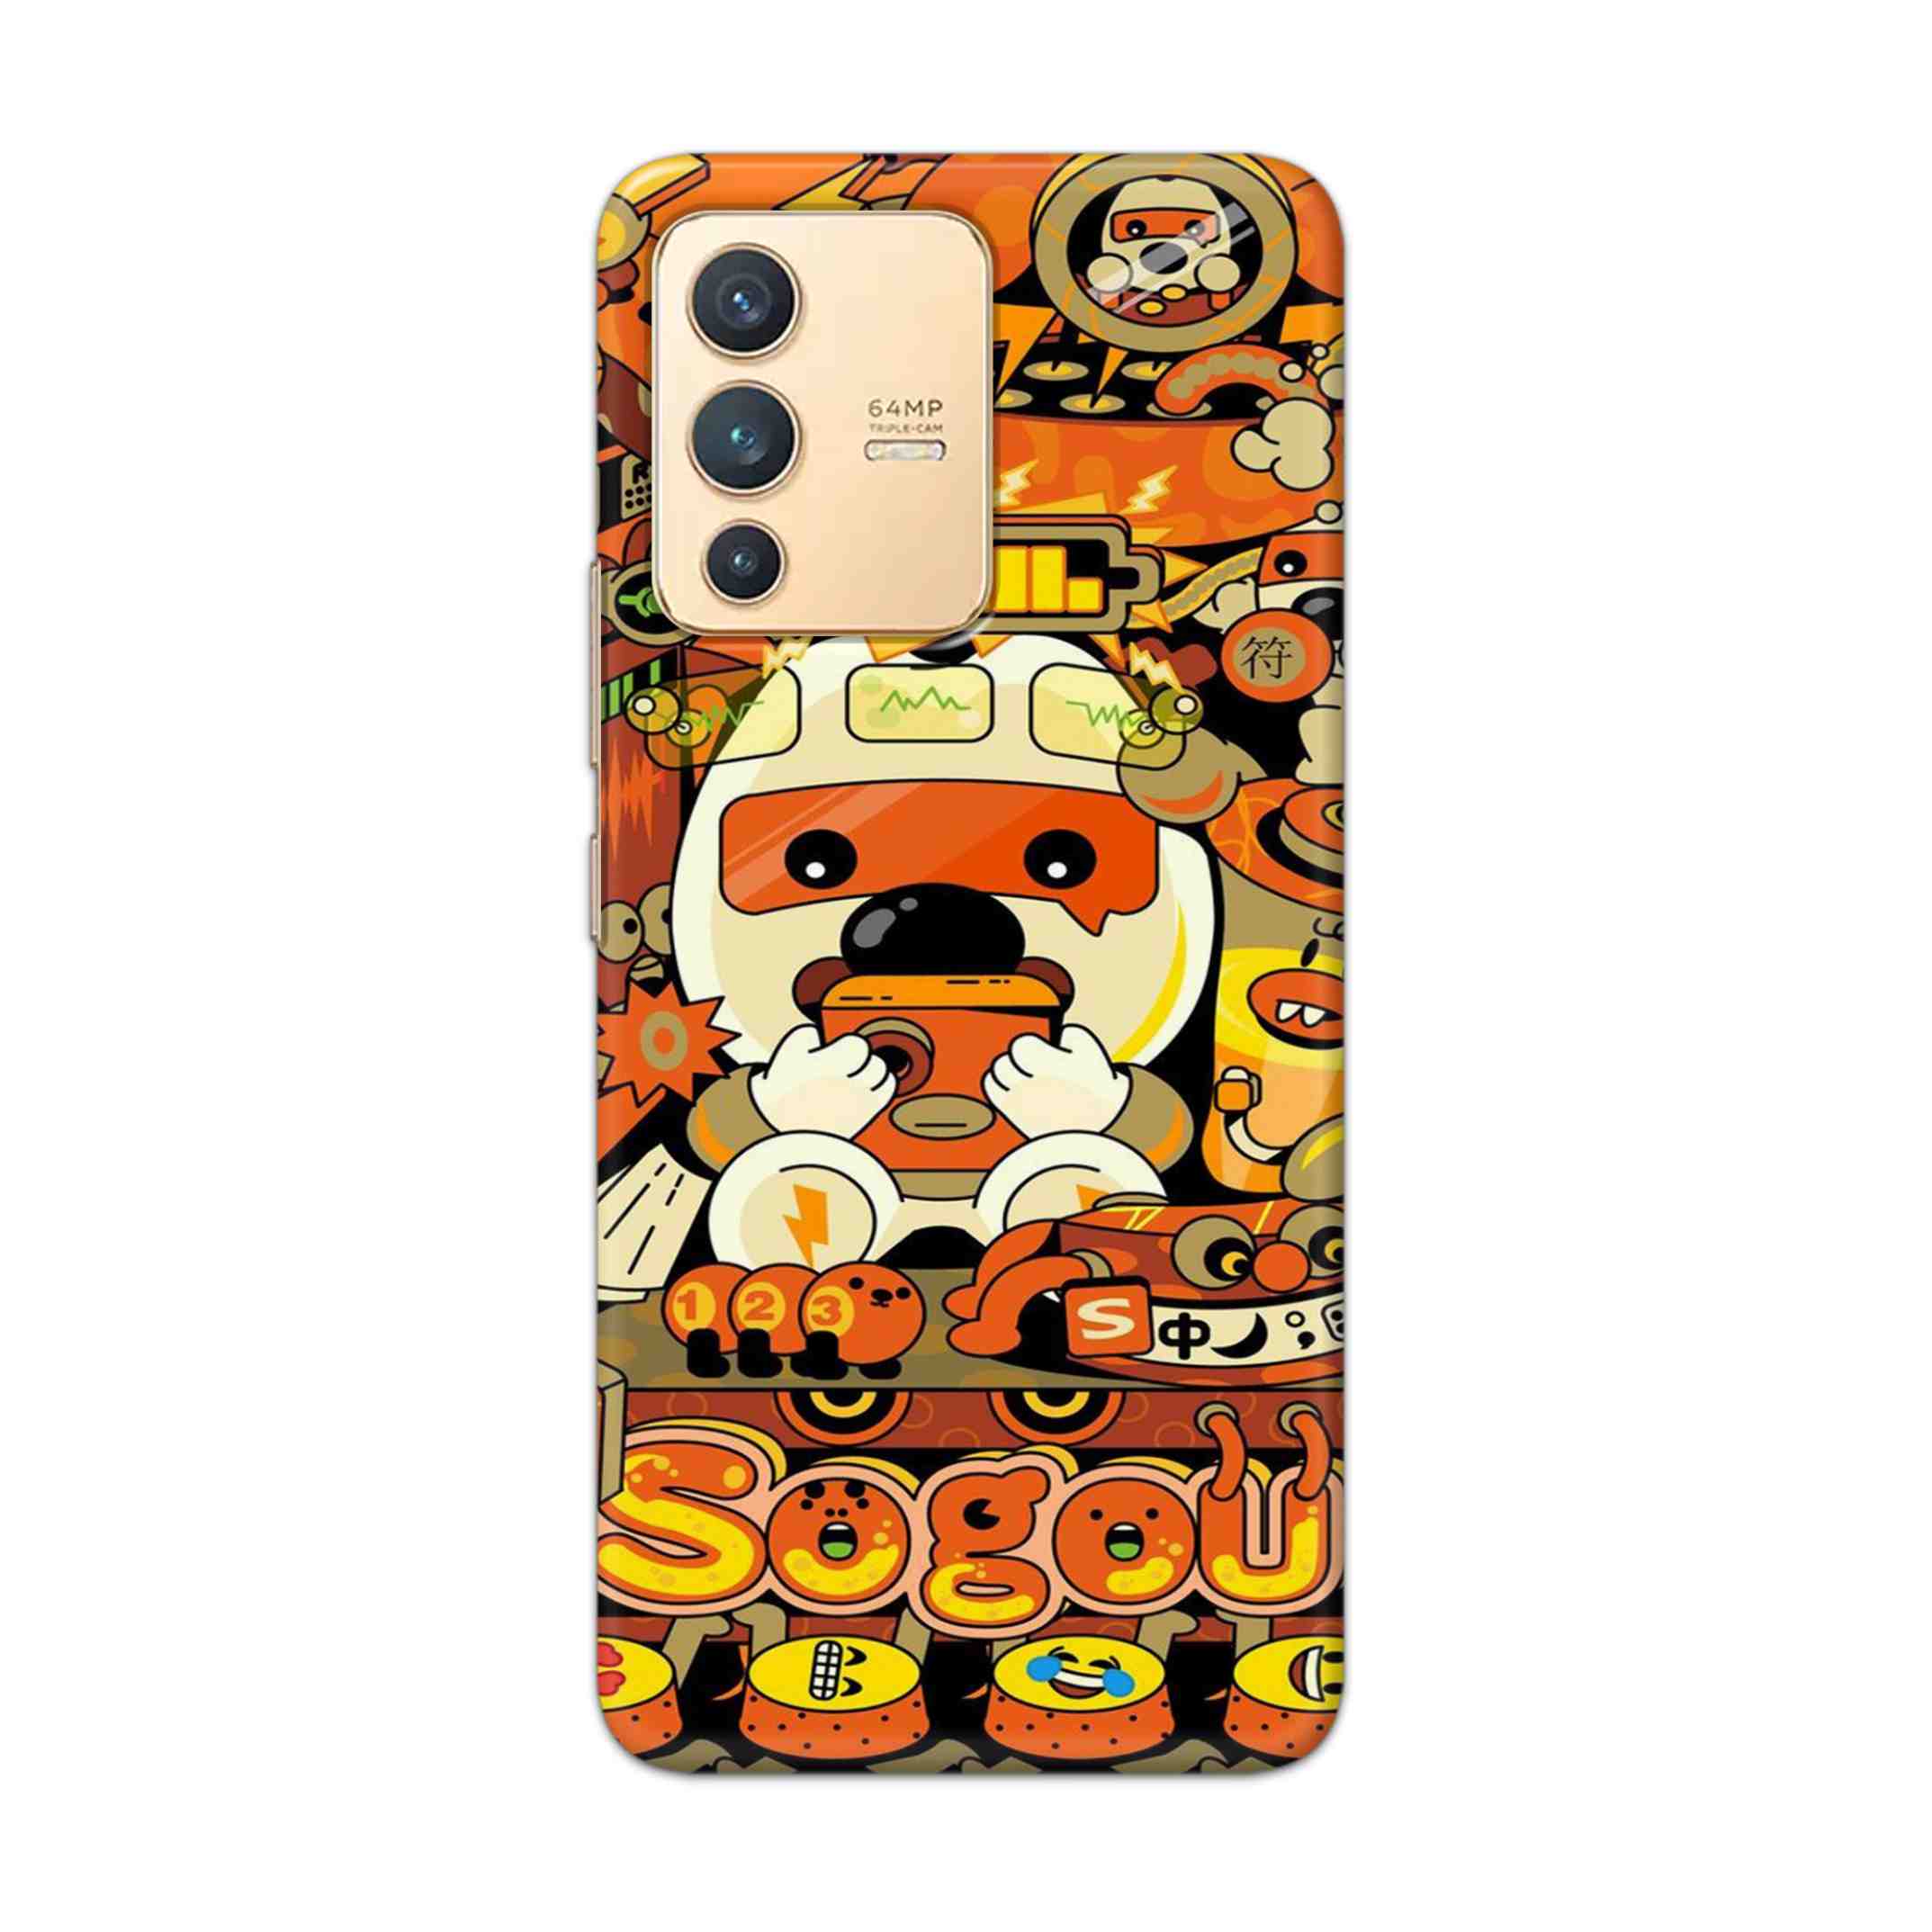 Buy Sogou Hard Back Mobile Phone Case Cover For Vivo V23 Online